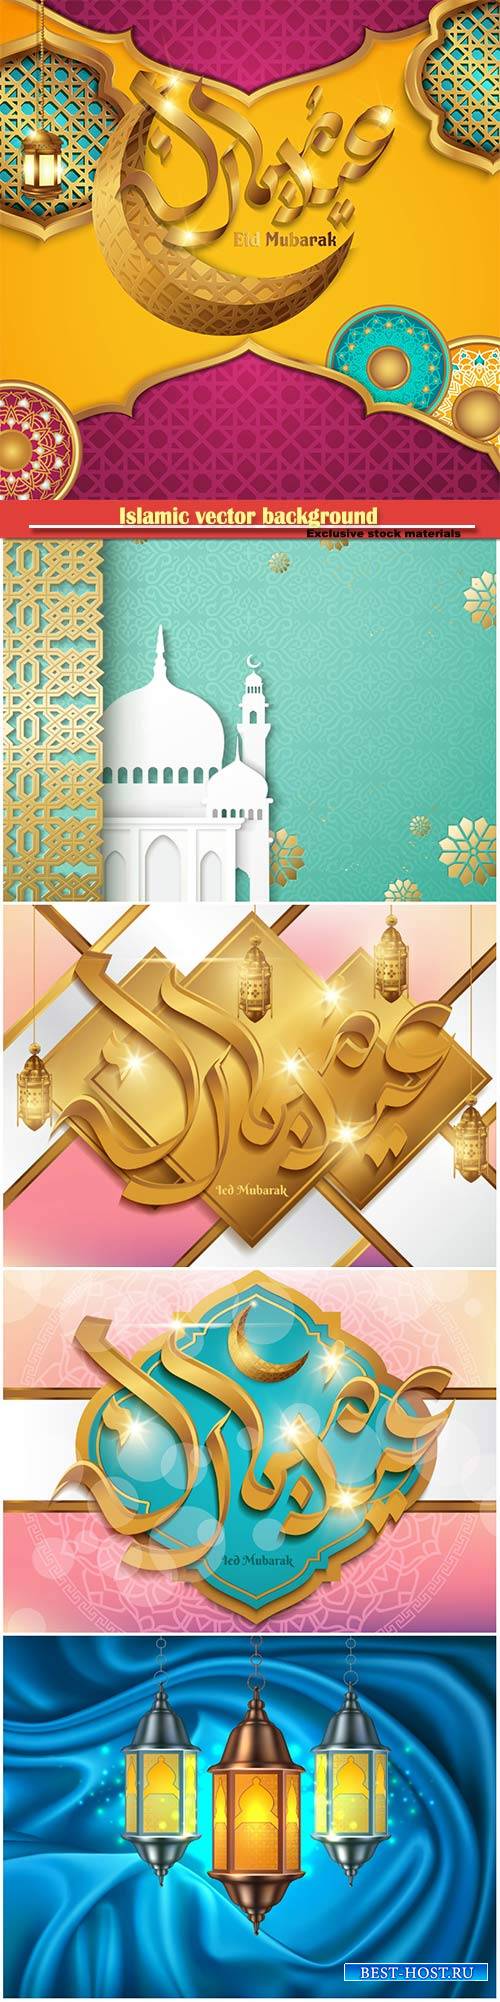 Islamic vector background with text Ramadan Kareem, Eid Mubarak calligraphy